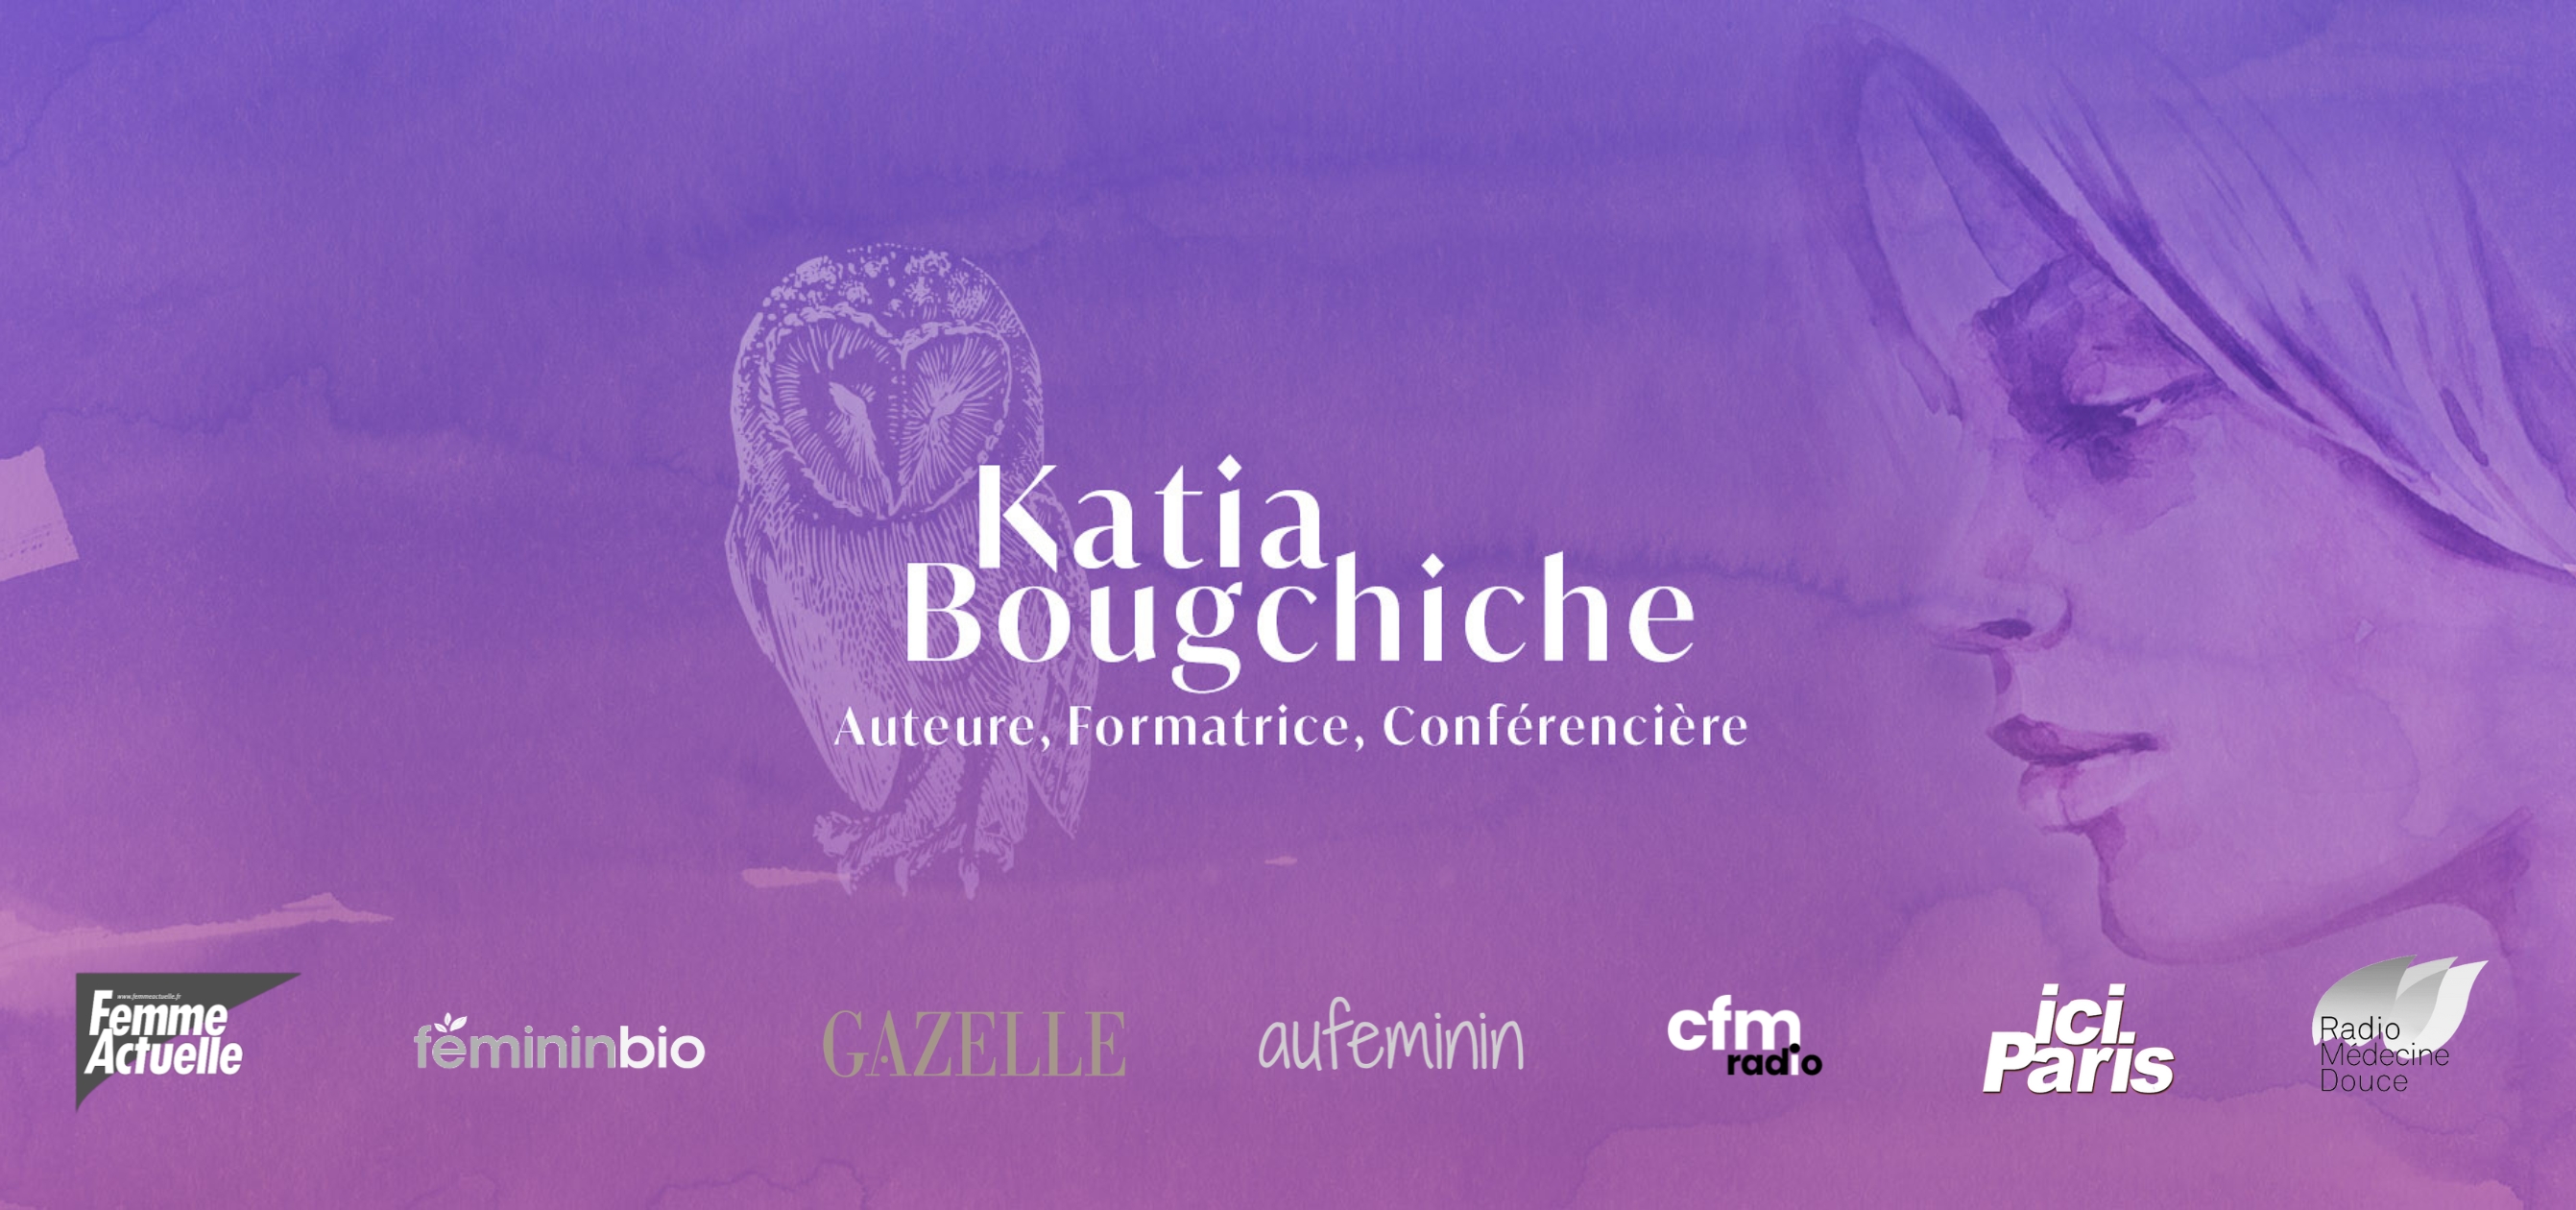 Katia Bougchiche